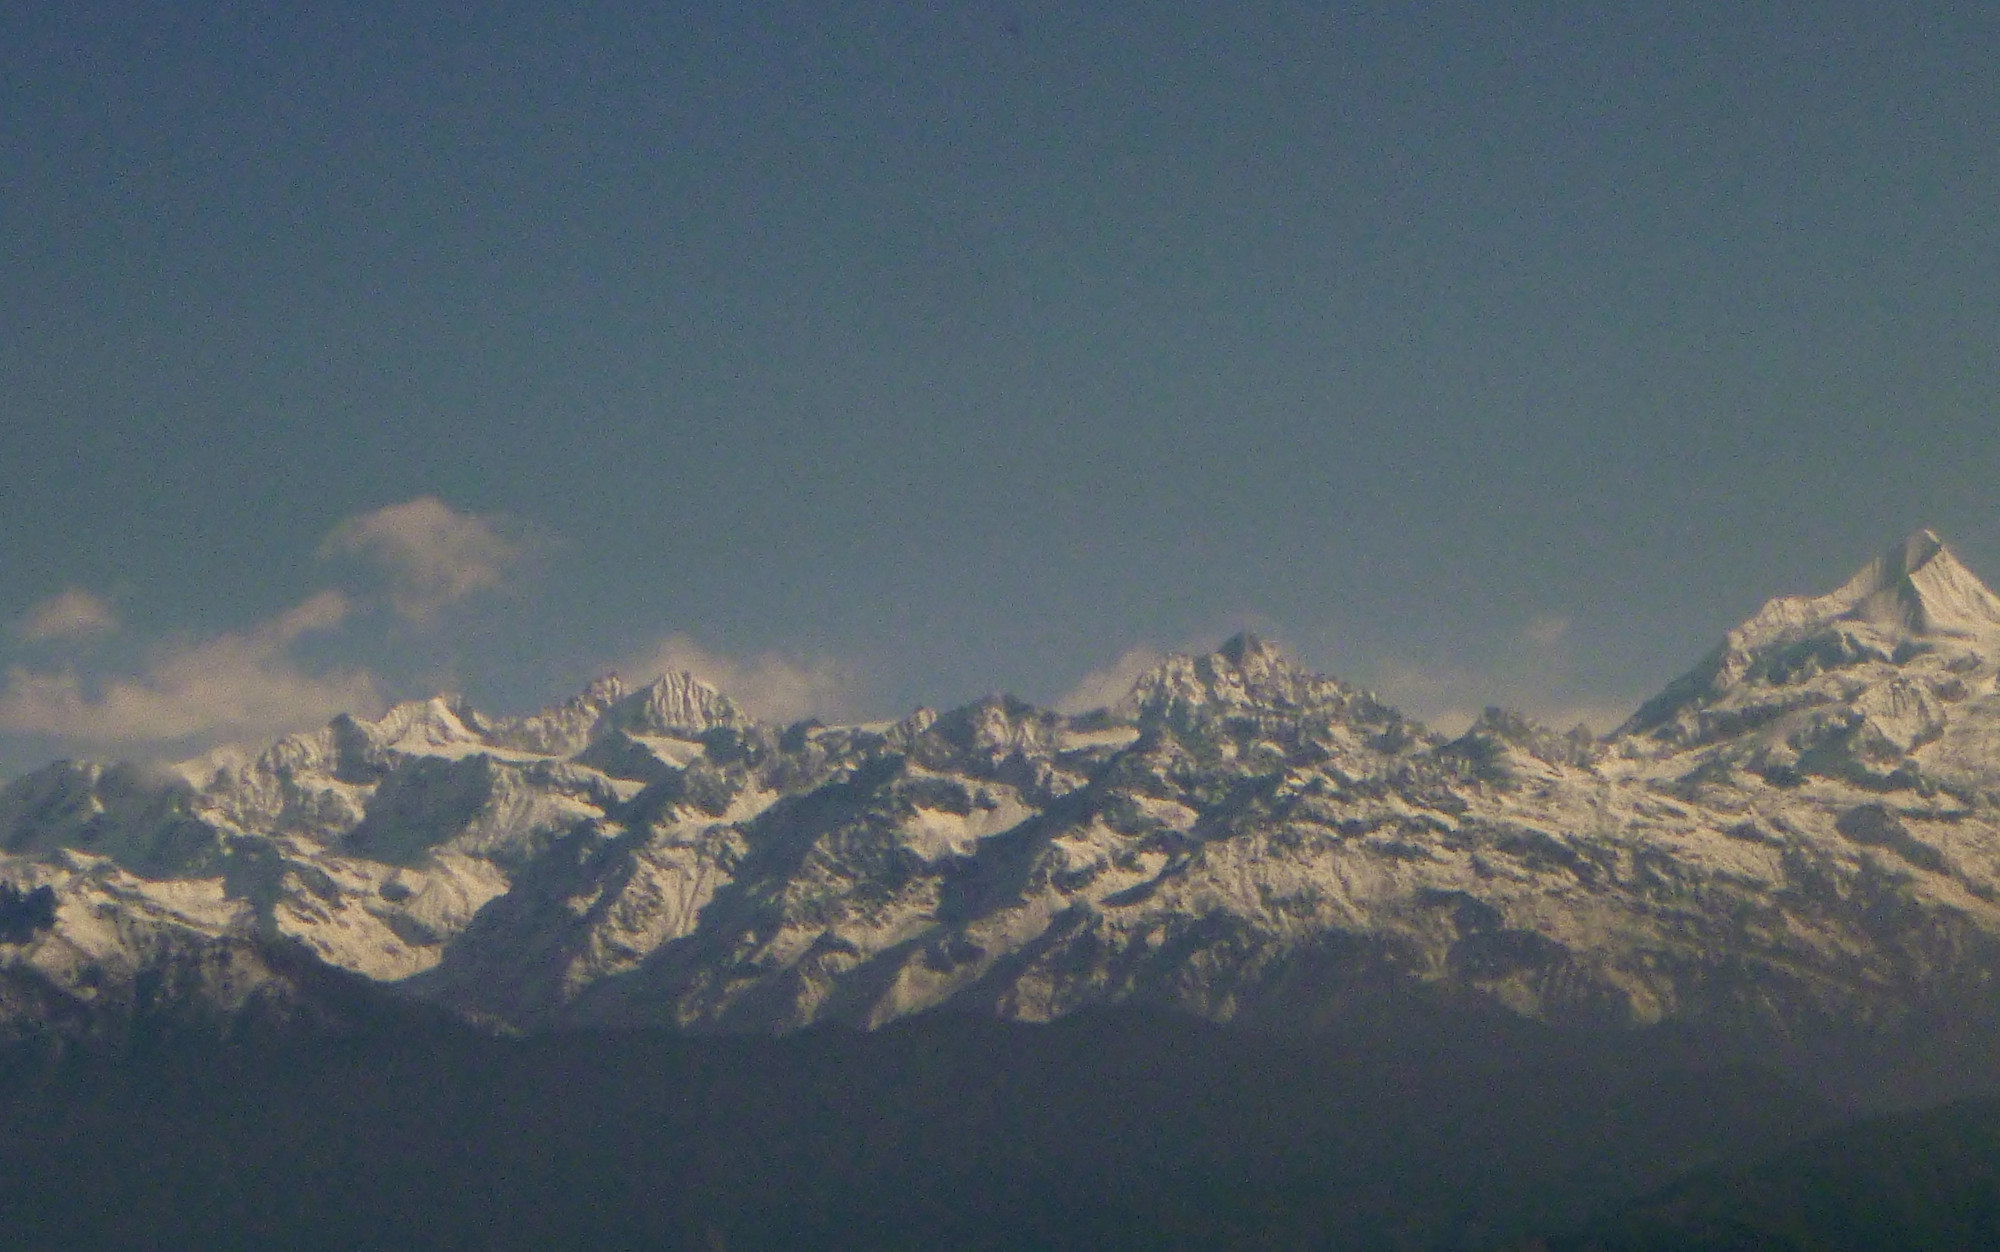 Nagarkot , Nepal